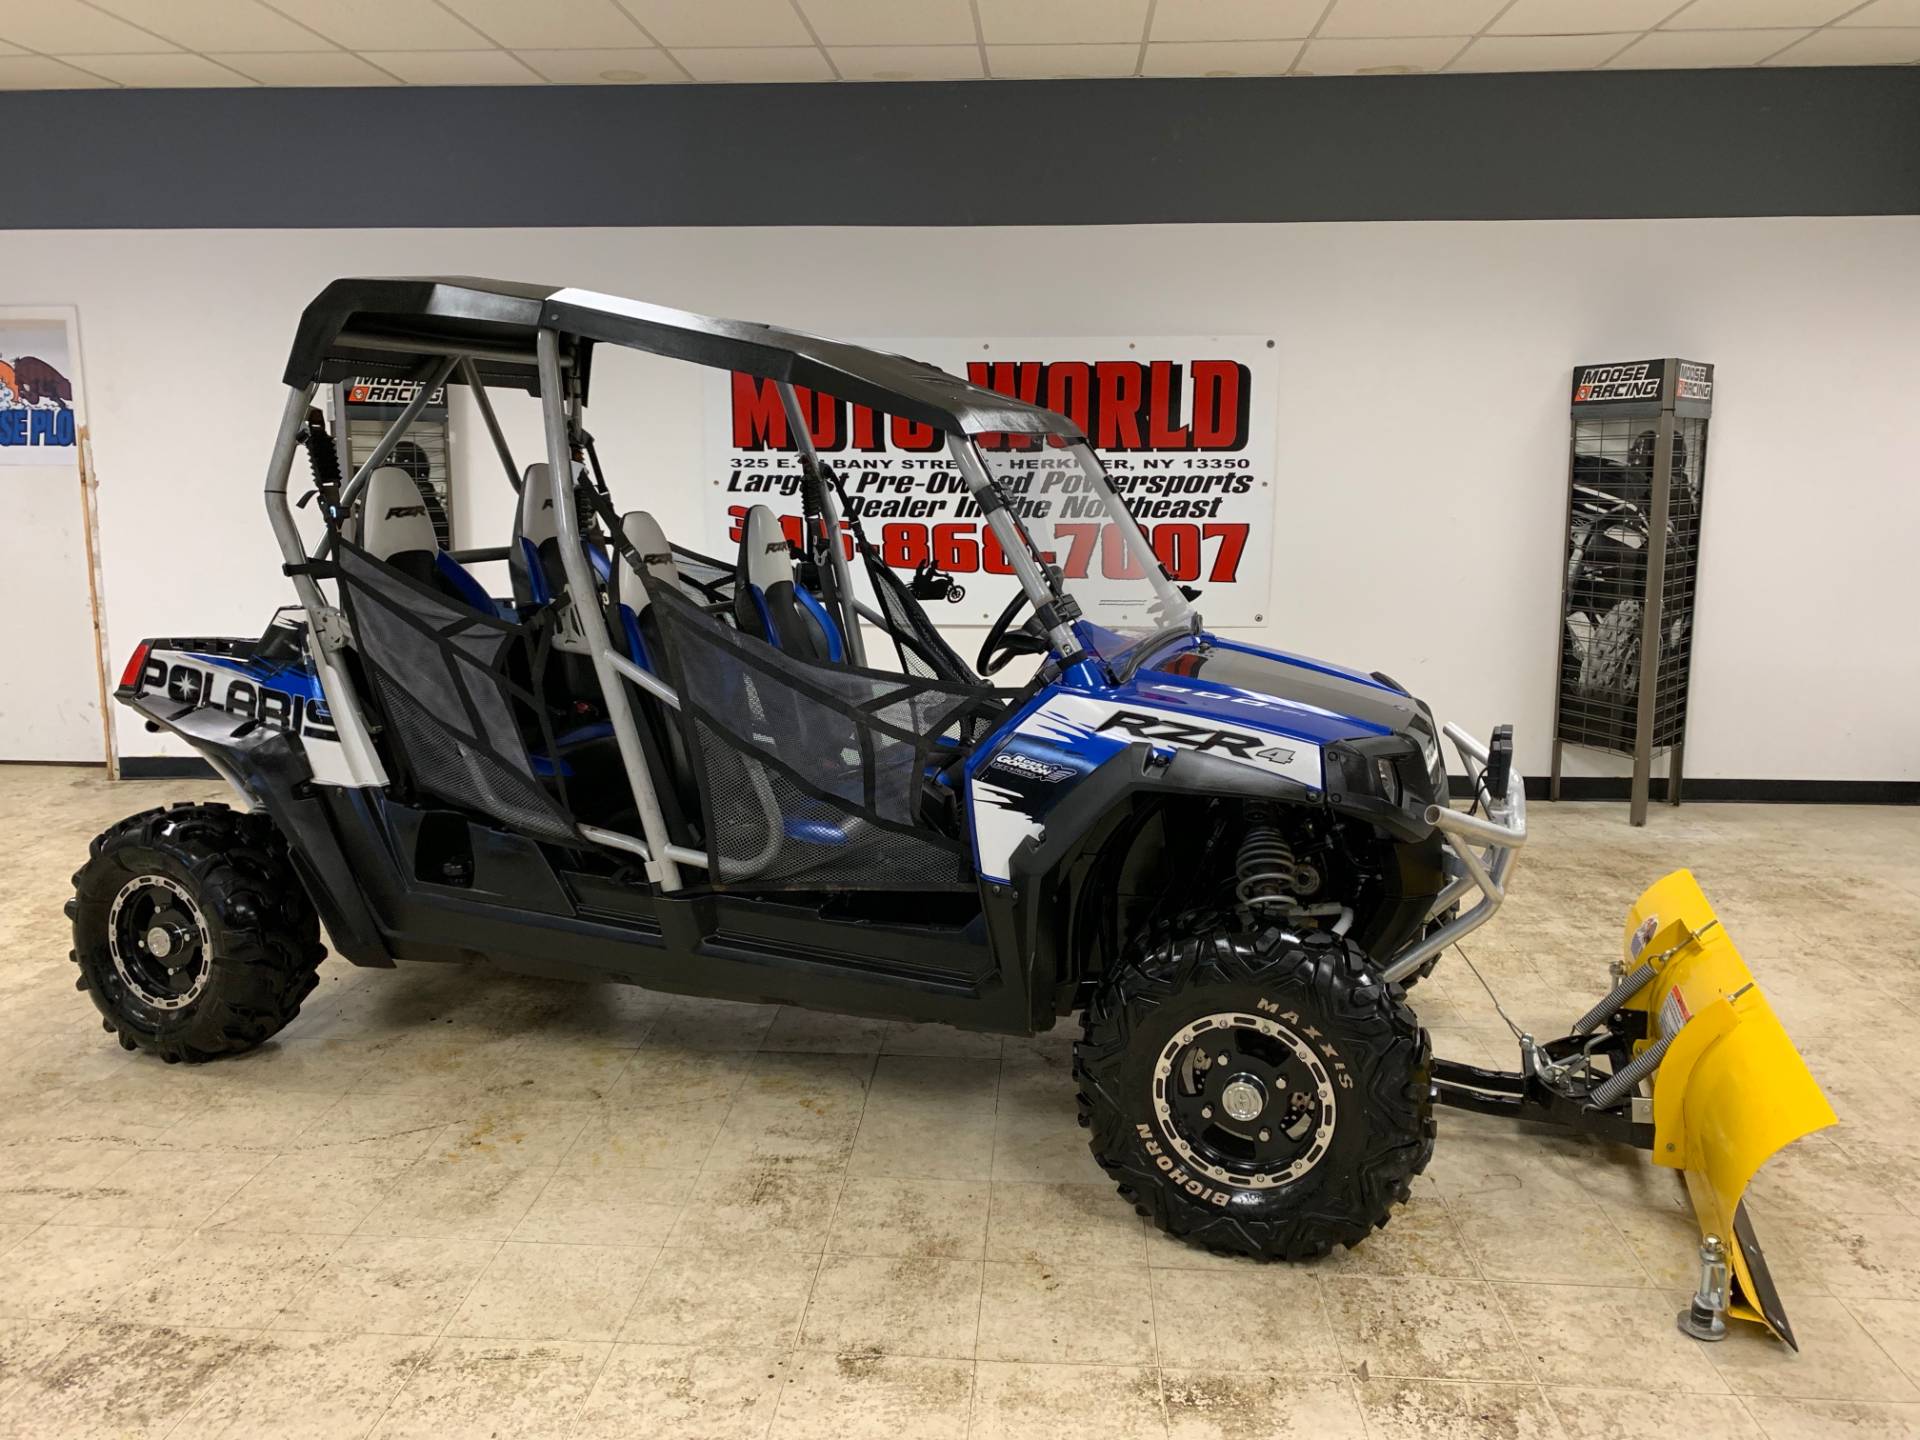 MotoWorld ATV, Inc Inventory Dealer in Herkimer, NY 13350